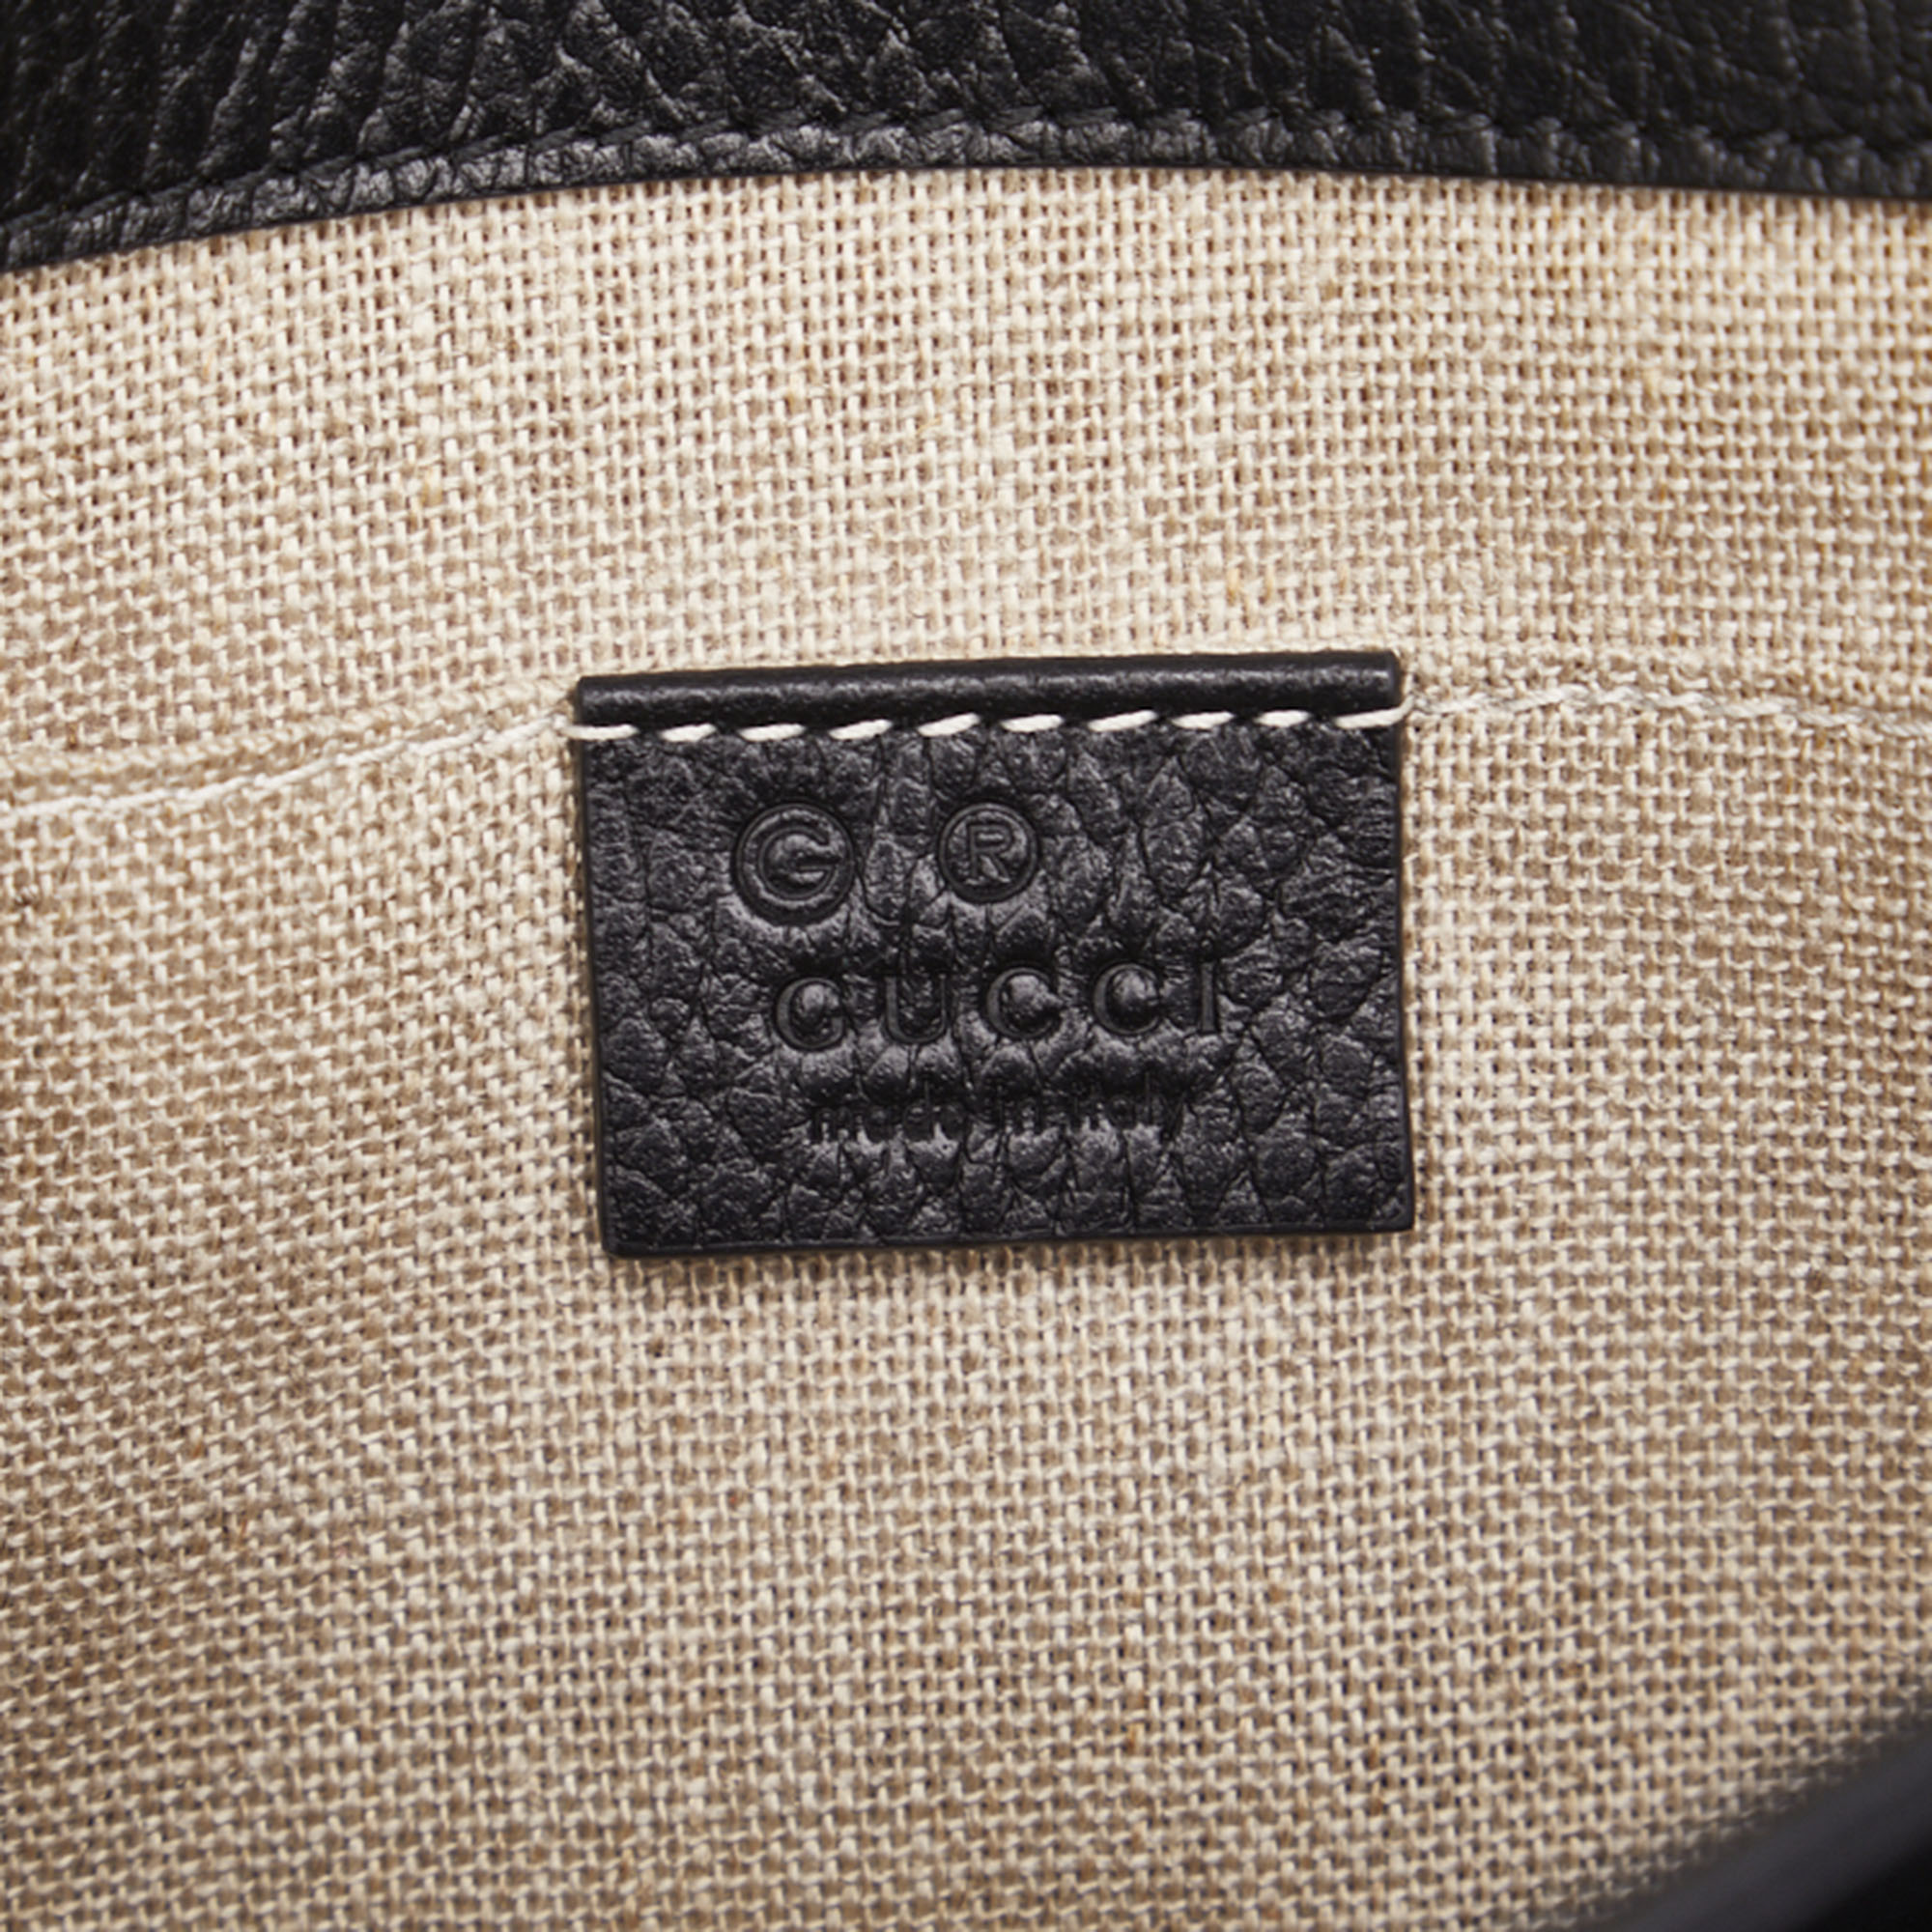 Gucci Black Leather Dollar Interlocking G Shoulder Bag